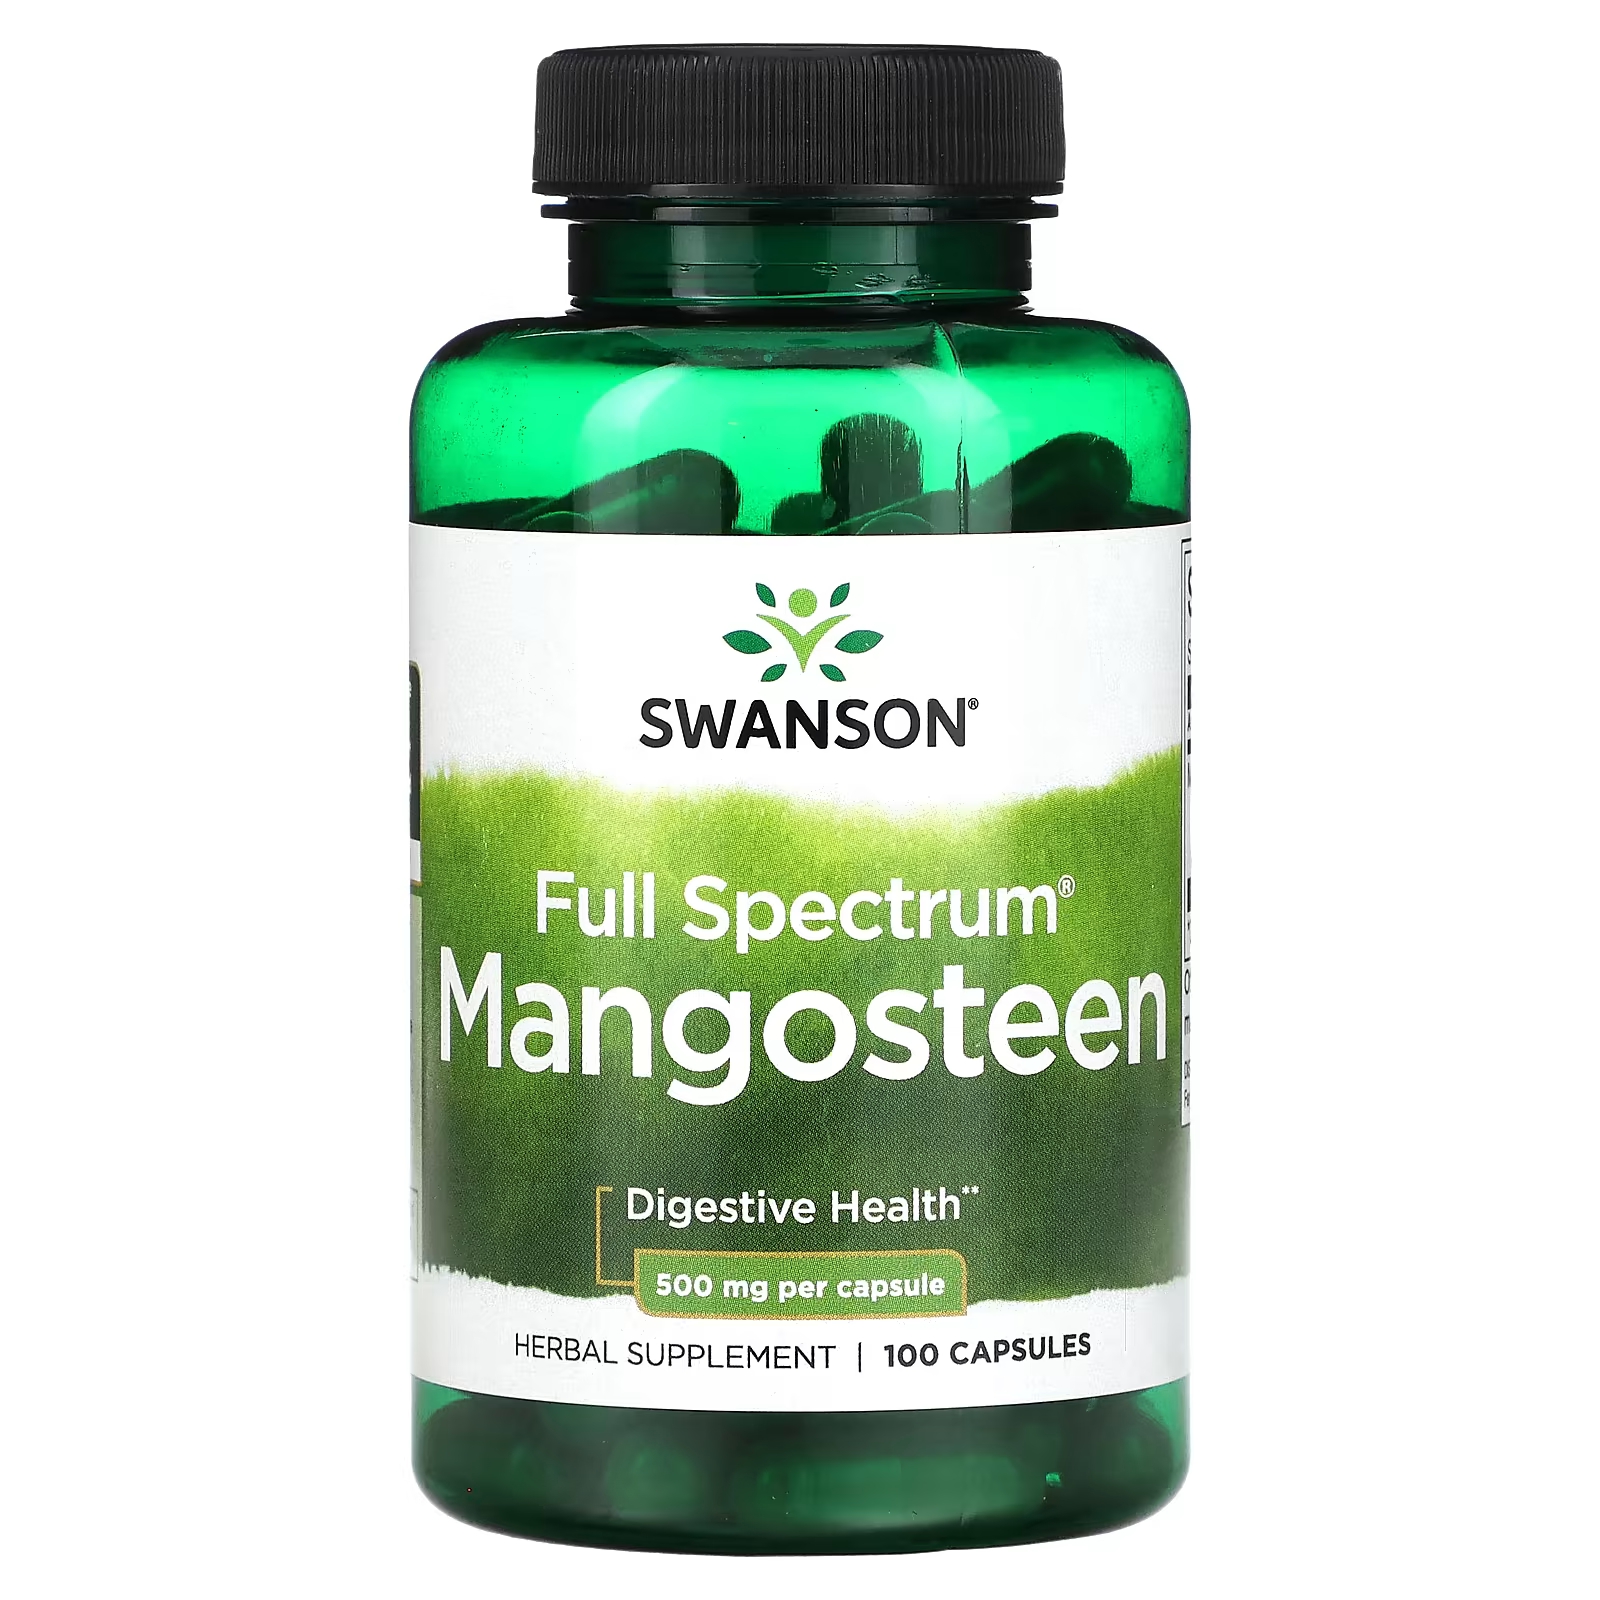 Мангостин Swanson полного спектра действия, 500 мг, 100 капсул swanson виноградные косточки полного спектра 380 мг 100 капсул